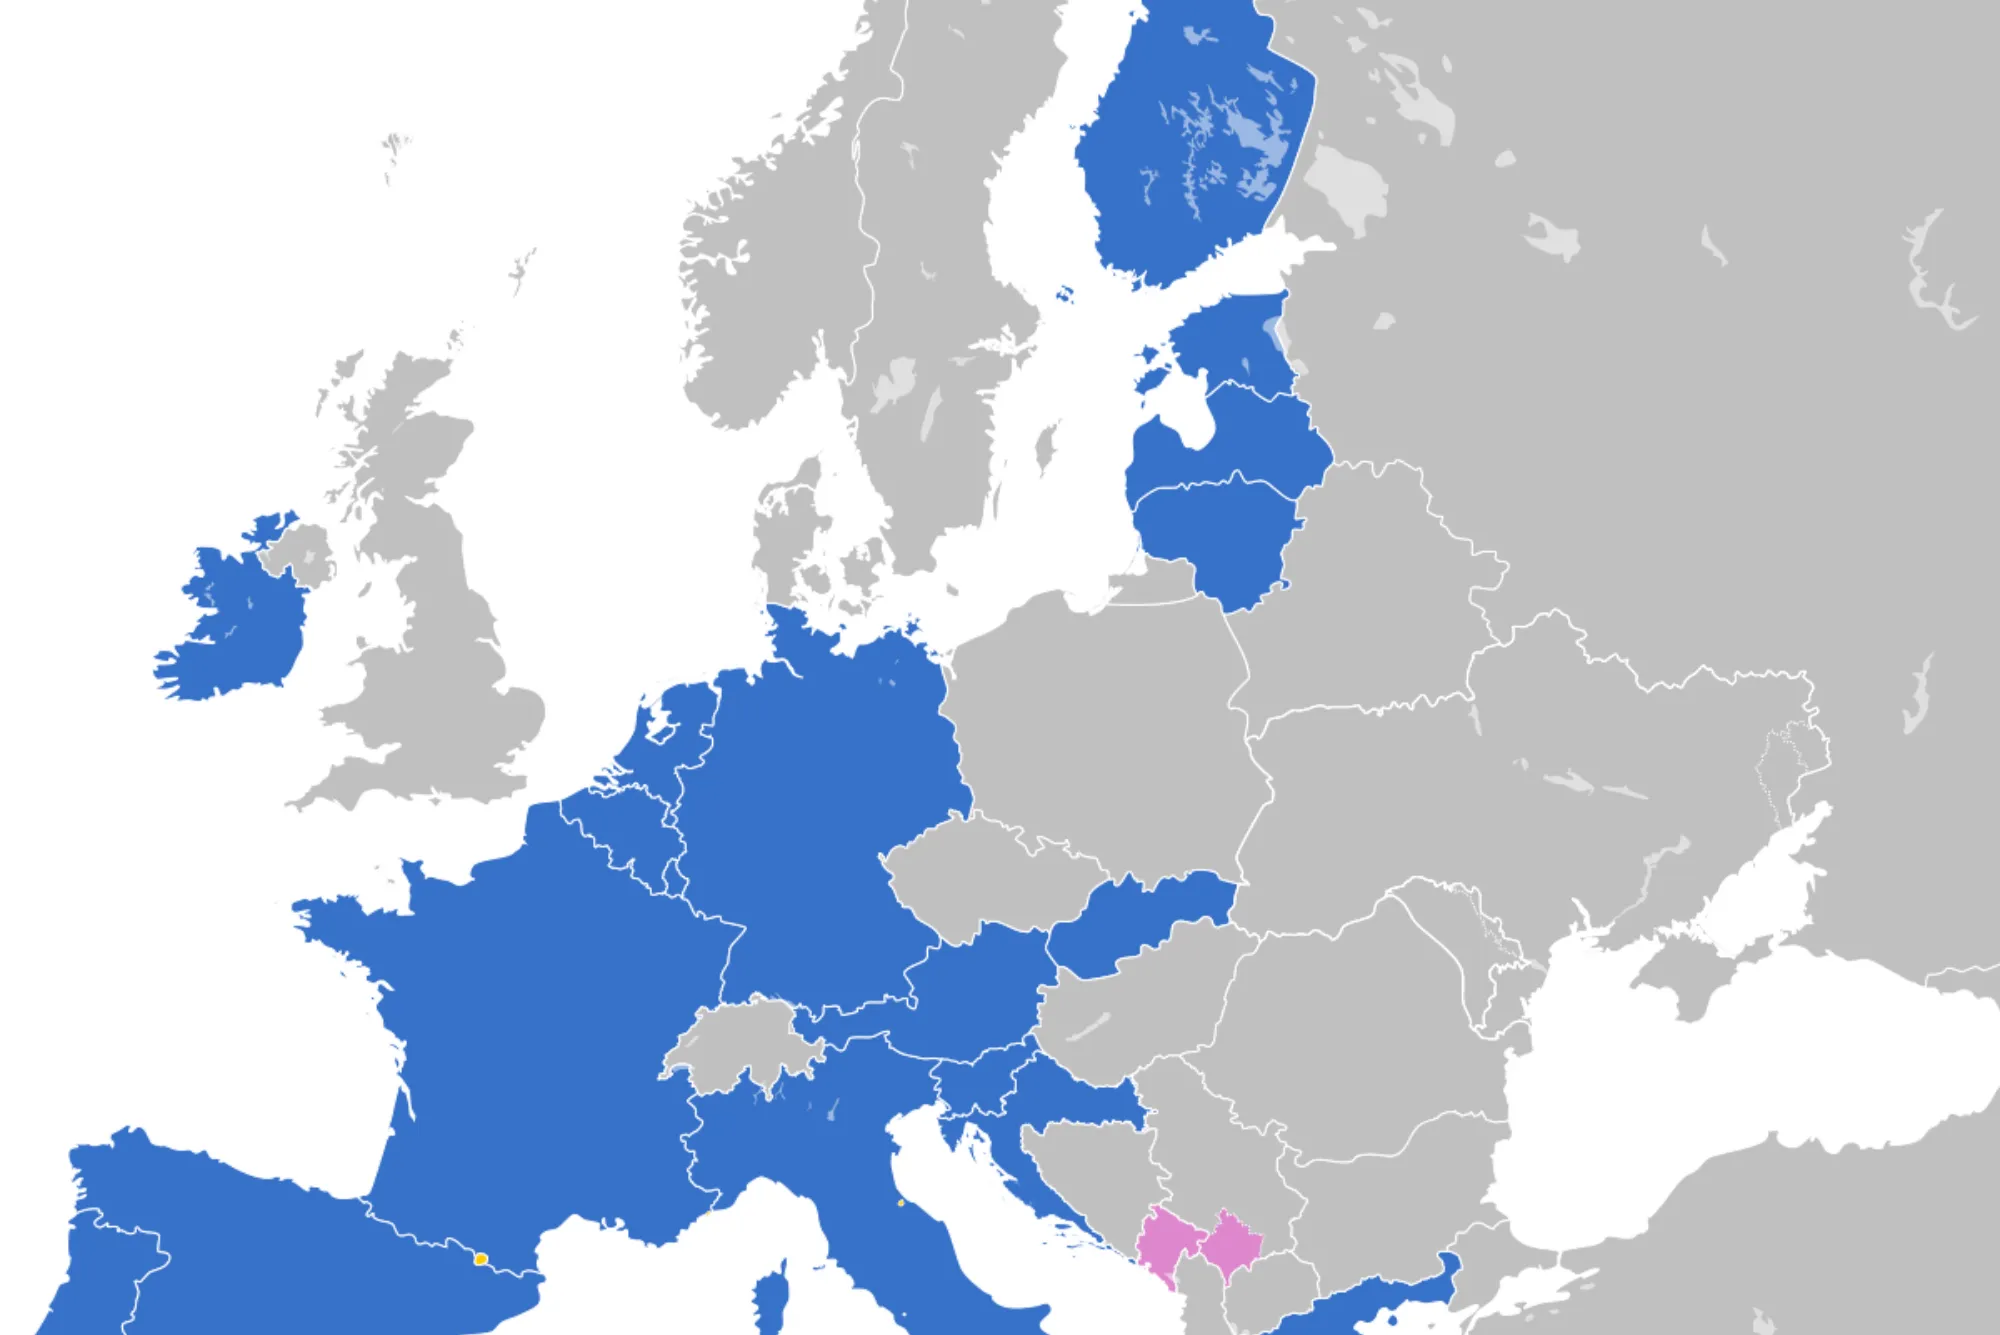 Eurozone Member Countries